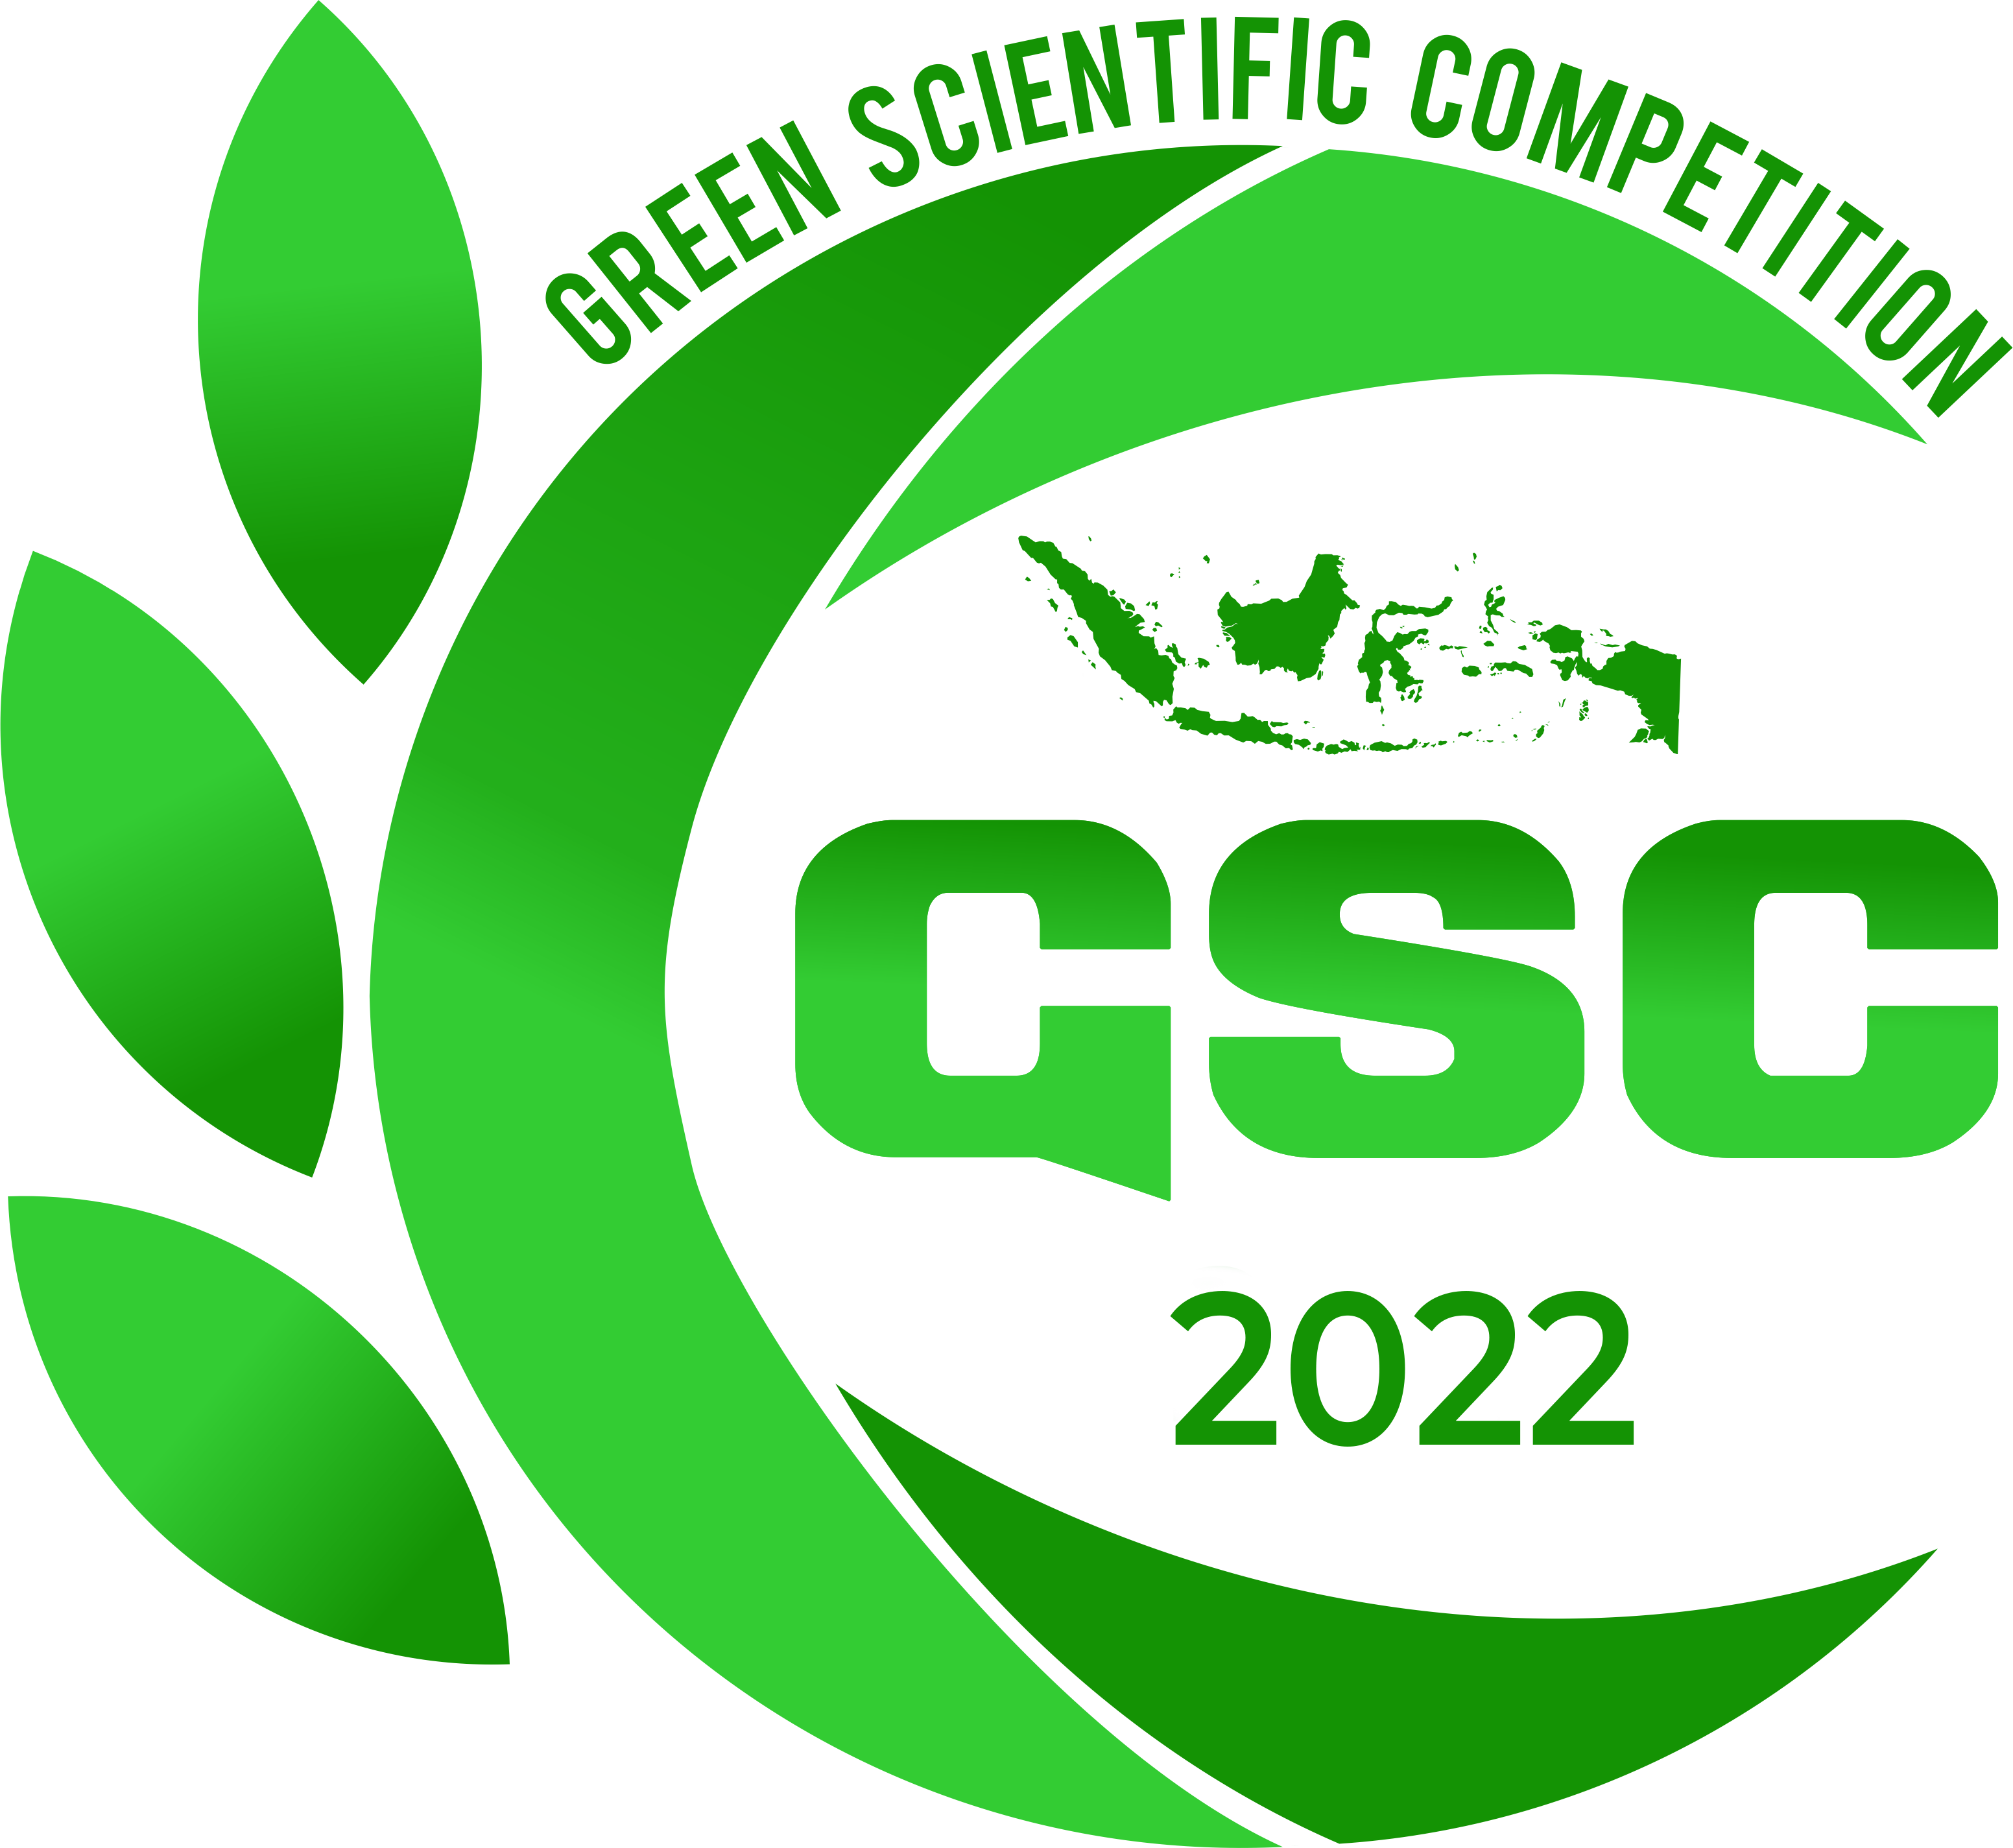 Green Scientific Competition